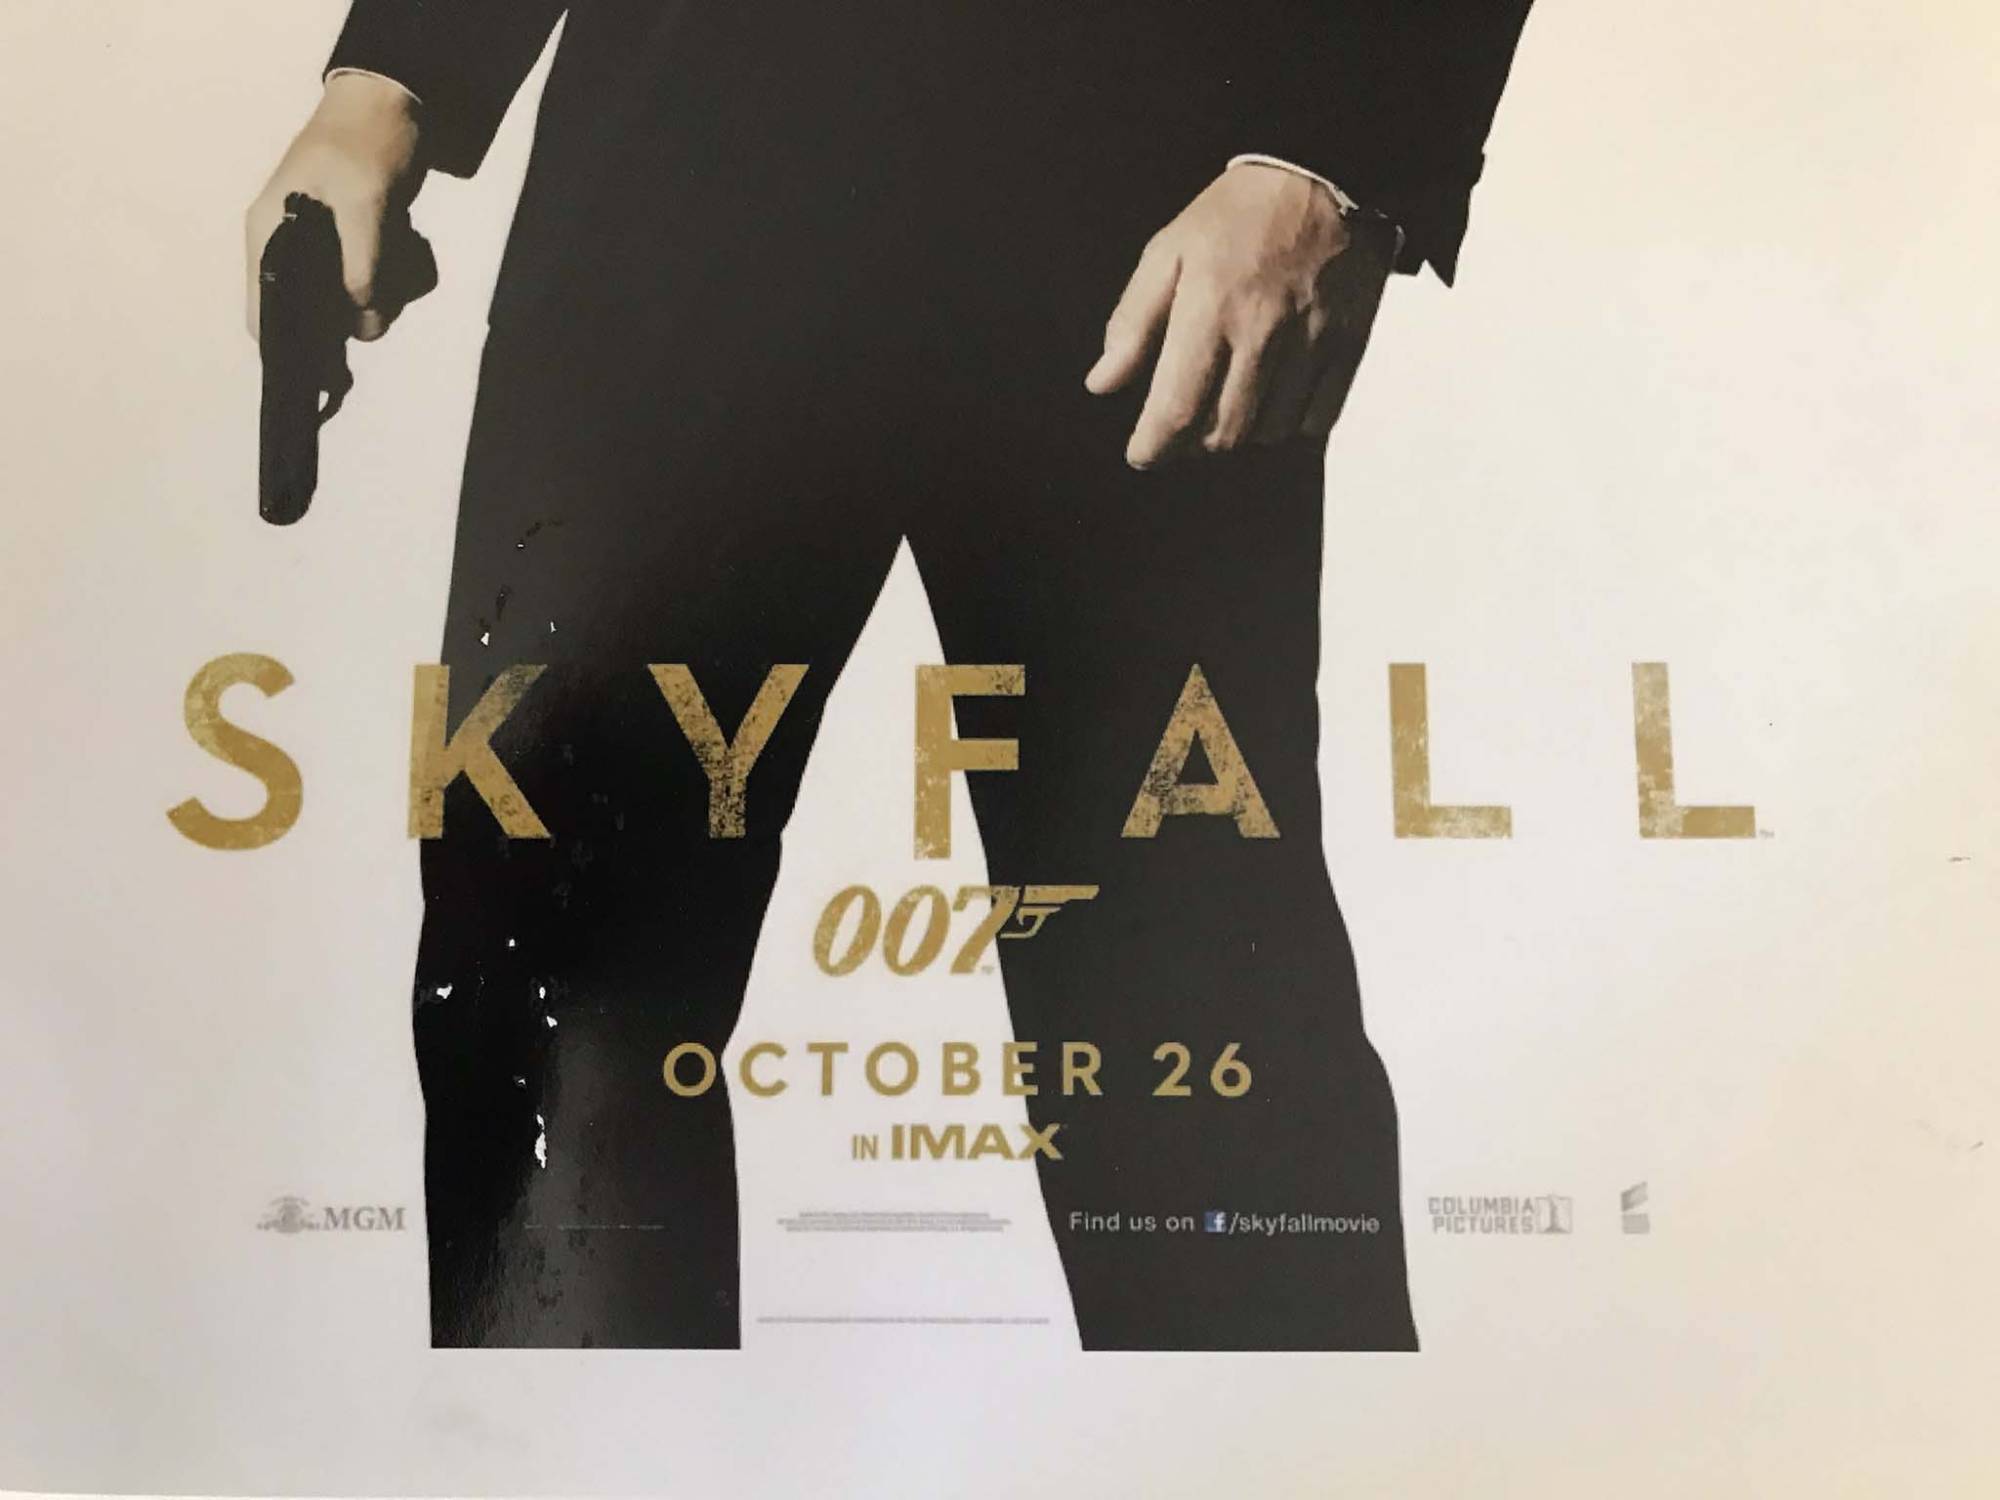 James Bond 007 movie poster